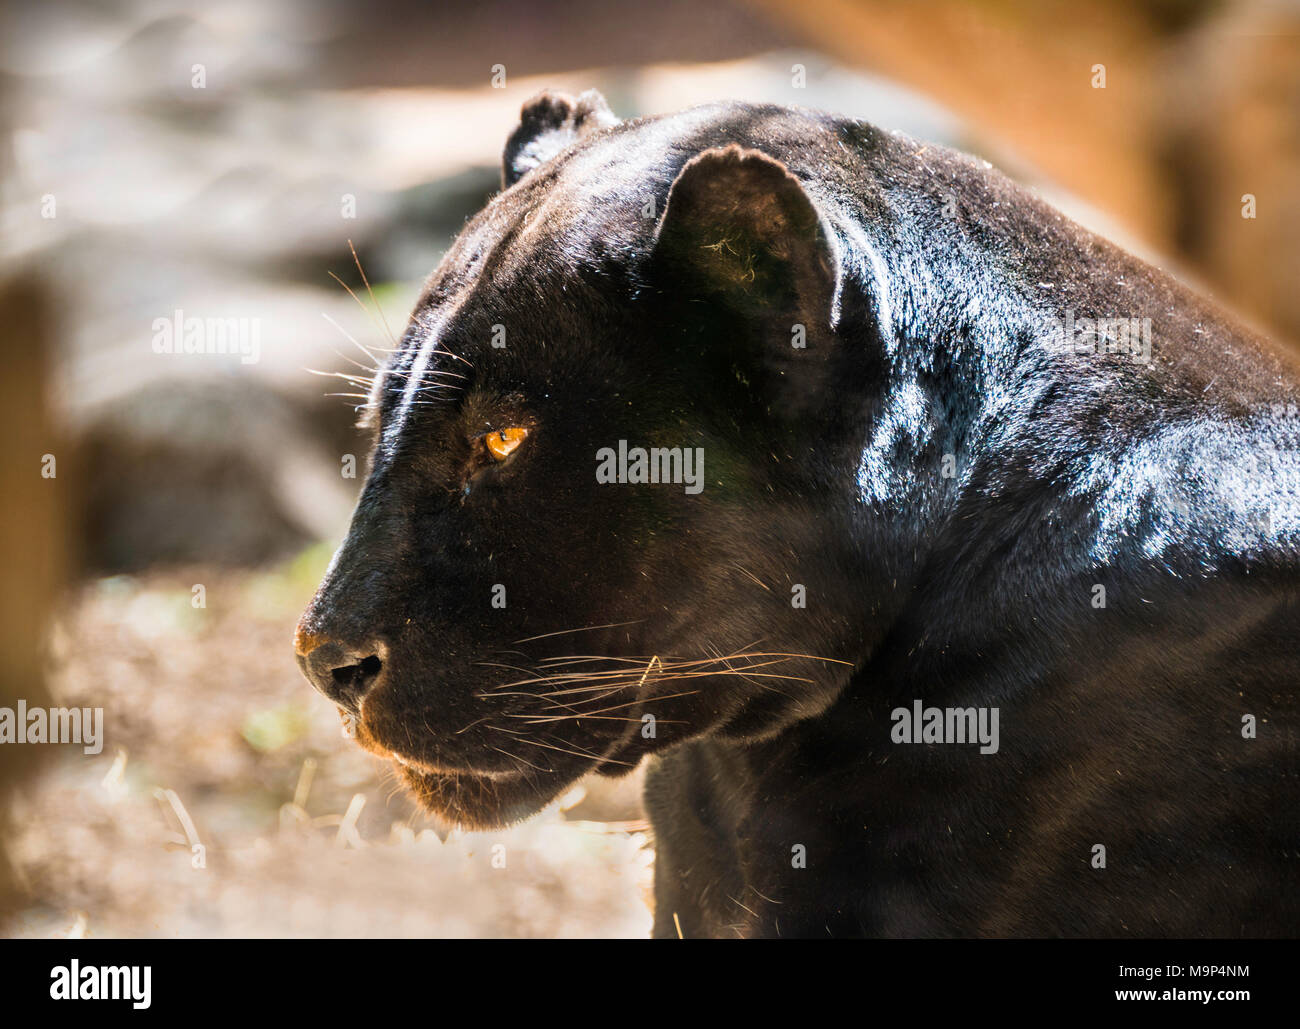 Jaguar (Panthera onca), Black Panther, Tier Portrait, Erwachsener, Captive, vorkommen Südamerika Stockfoto